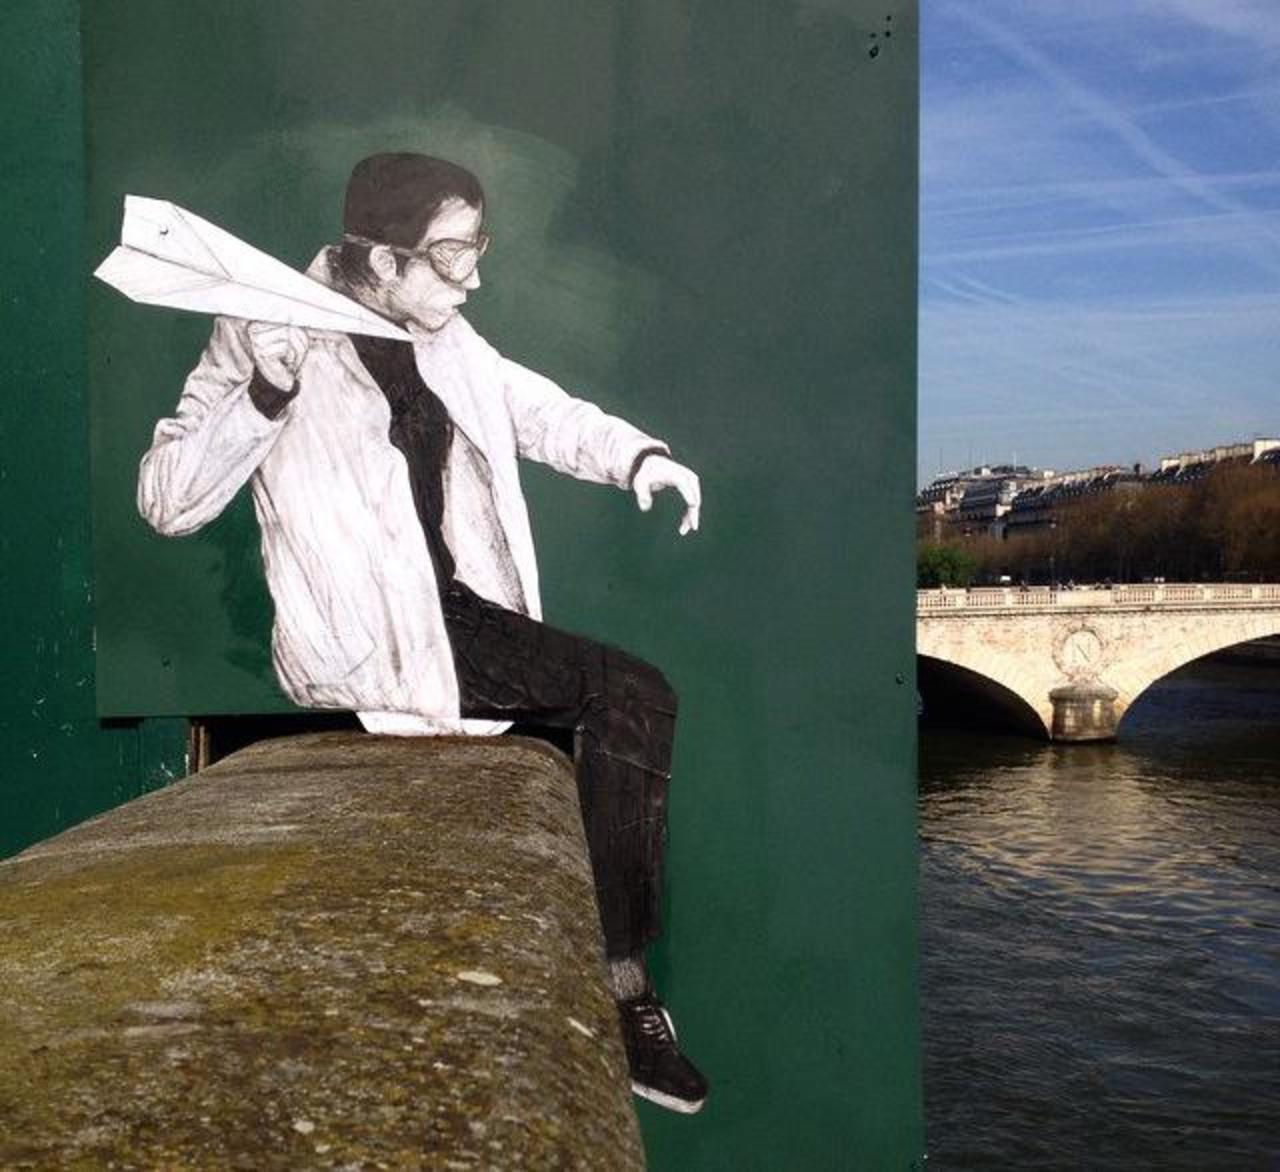 New Street Art by Levalet in Paris

#art #graffiti #arte #streetart http://t.co/L72UmiXTan